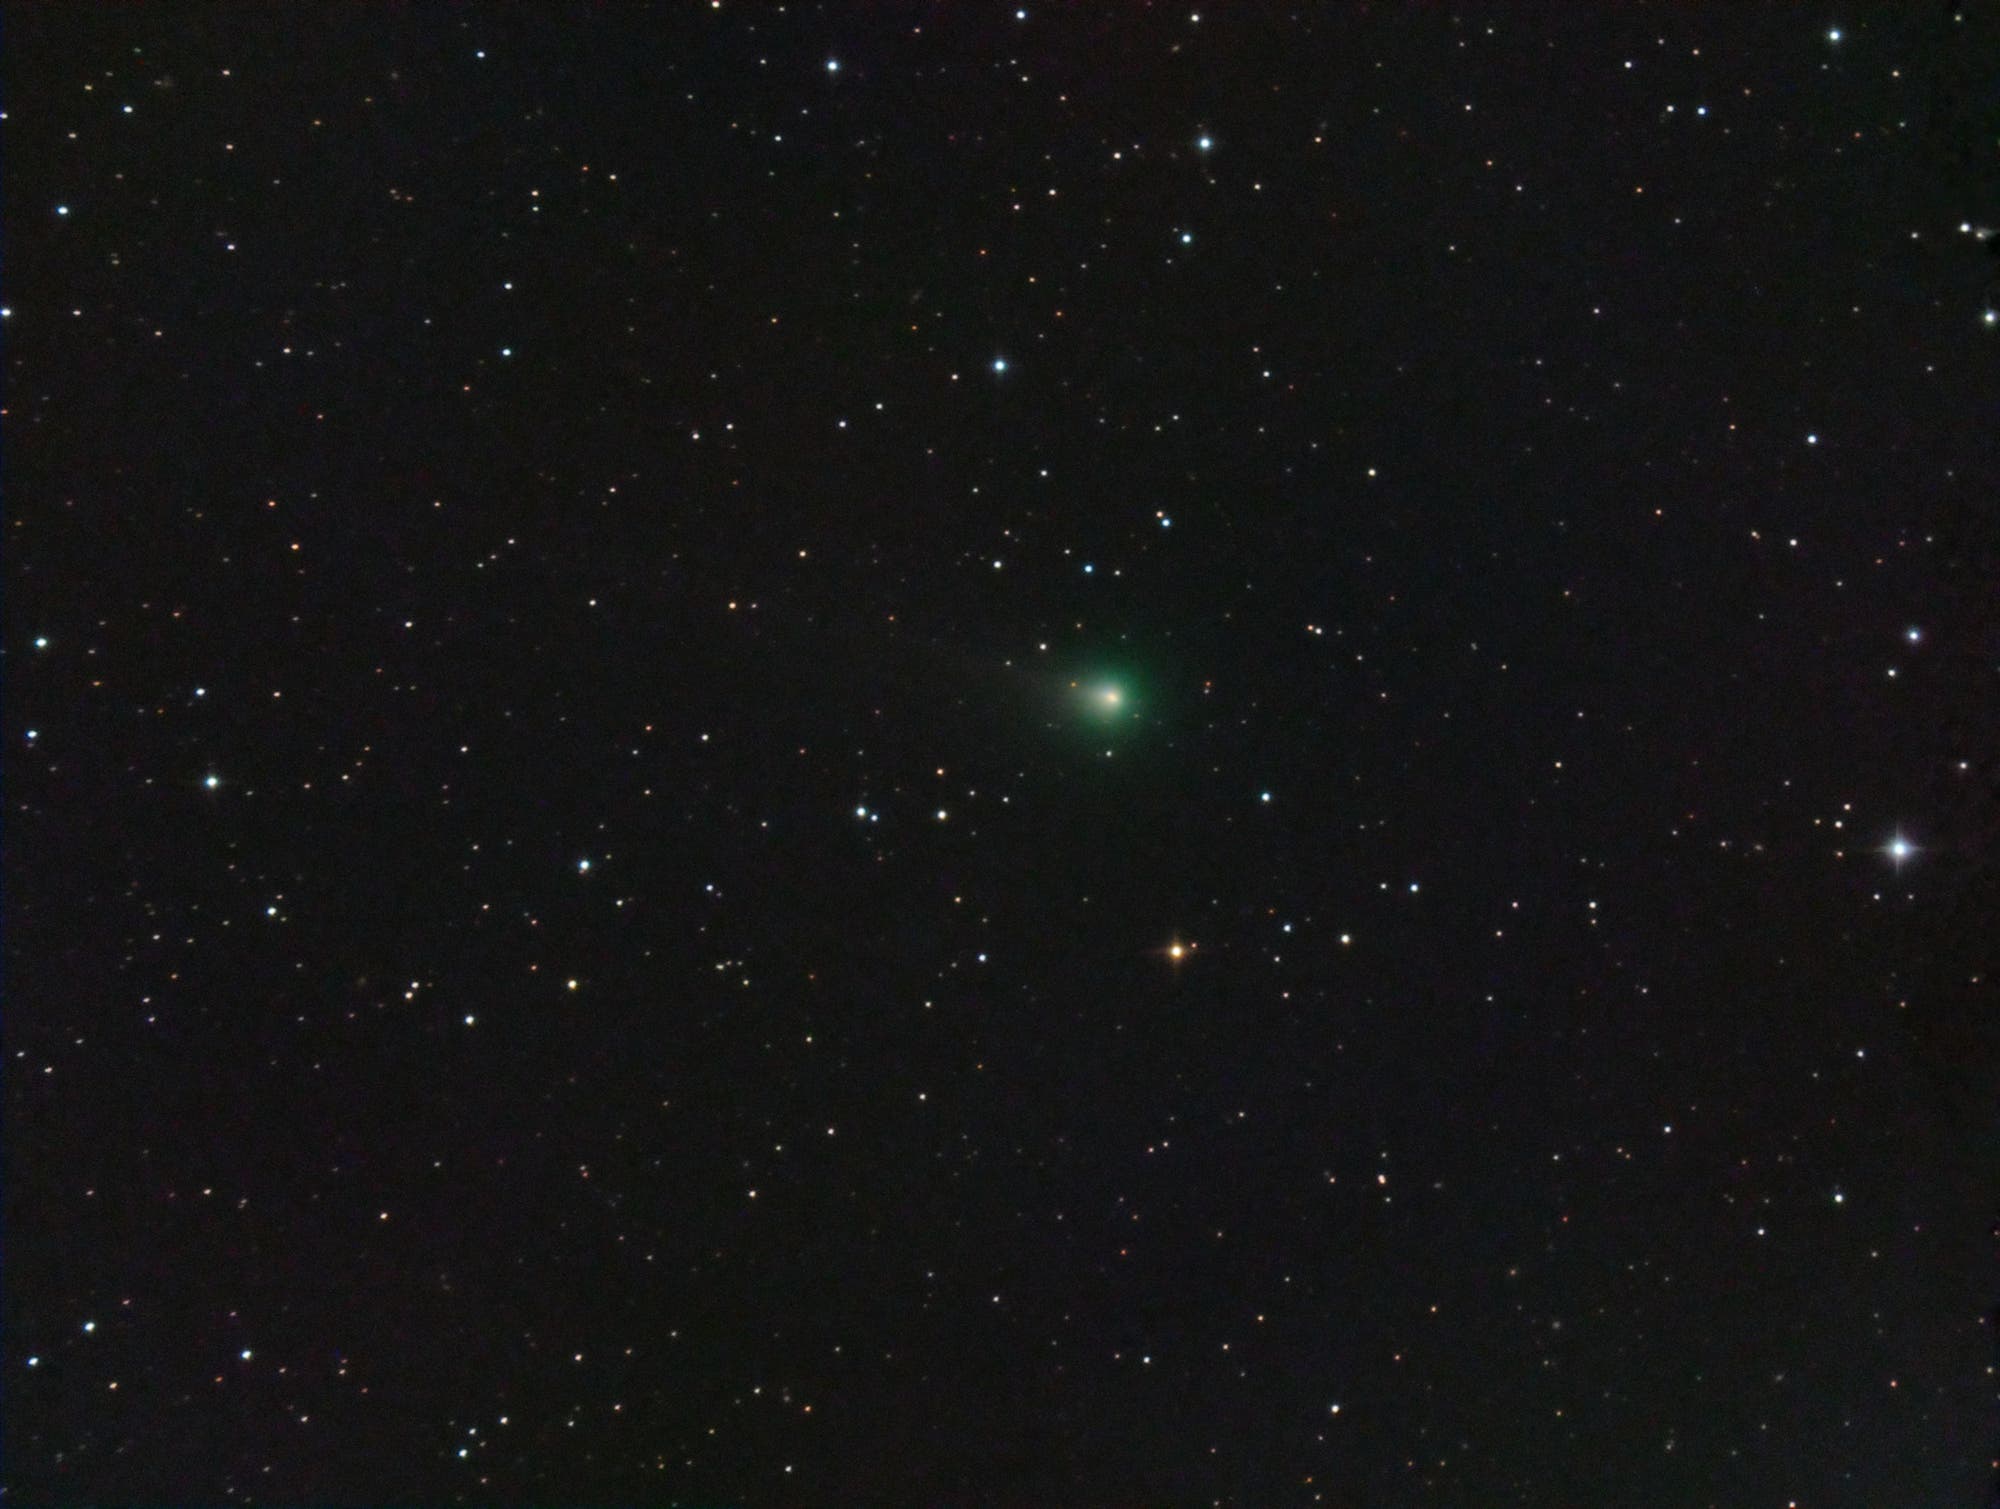 Comet 19P Borrelly